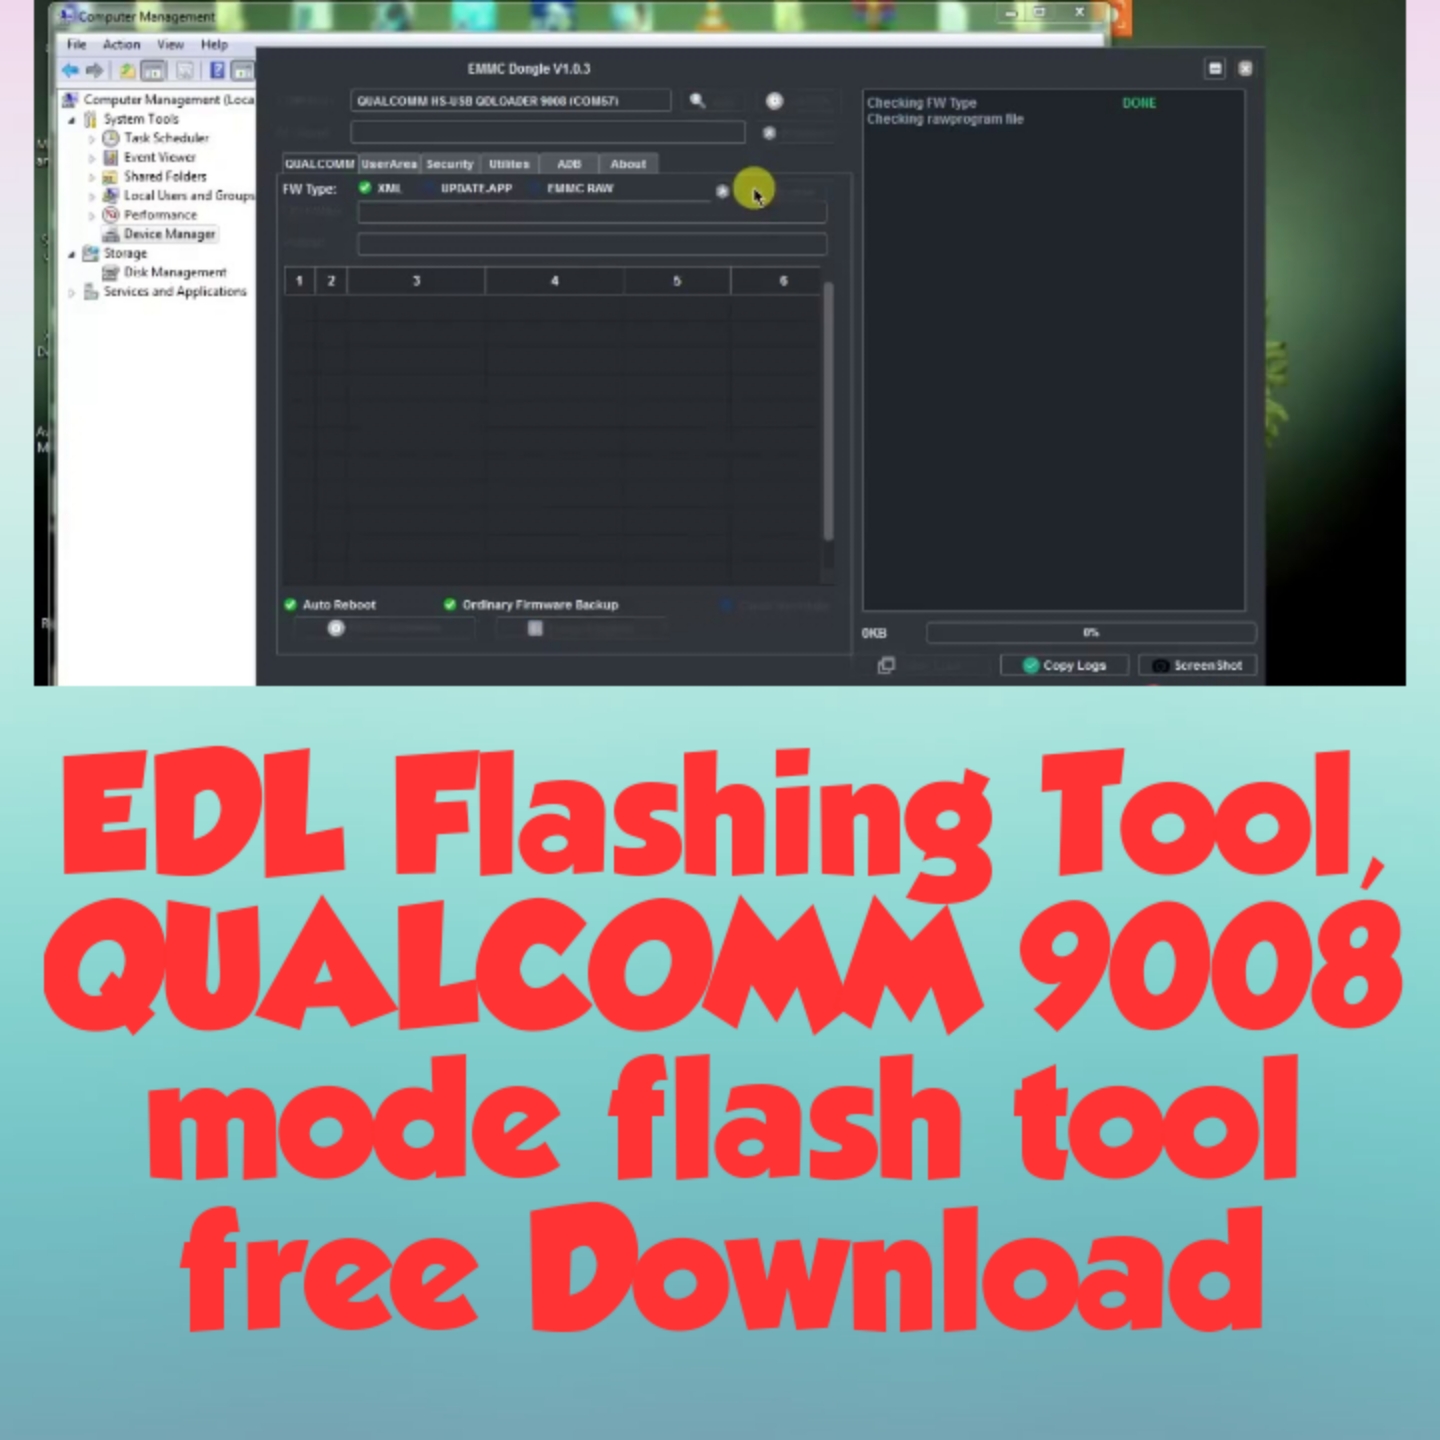 EDL Flashing Tool, QUALCOMM 9008 mode flash tool free Download